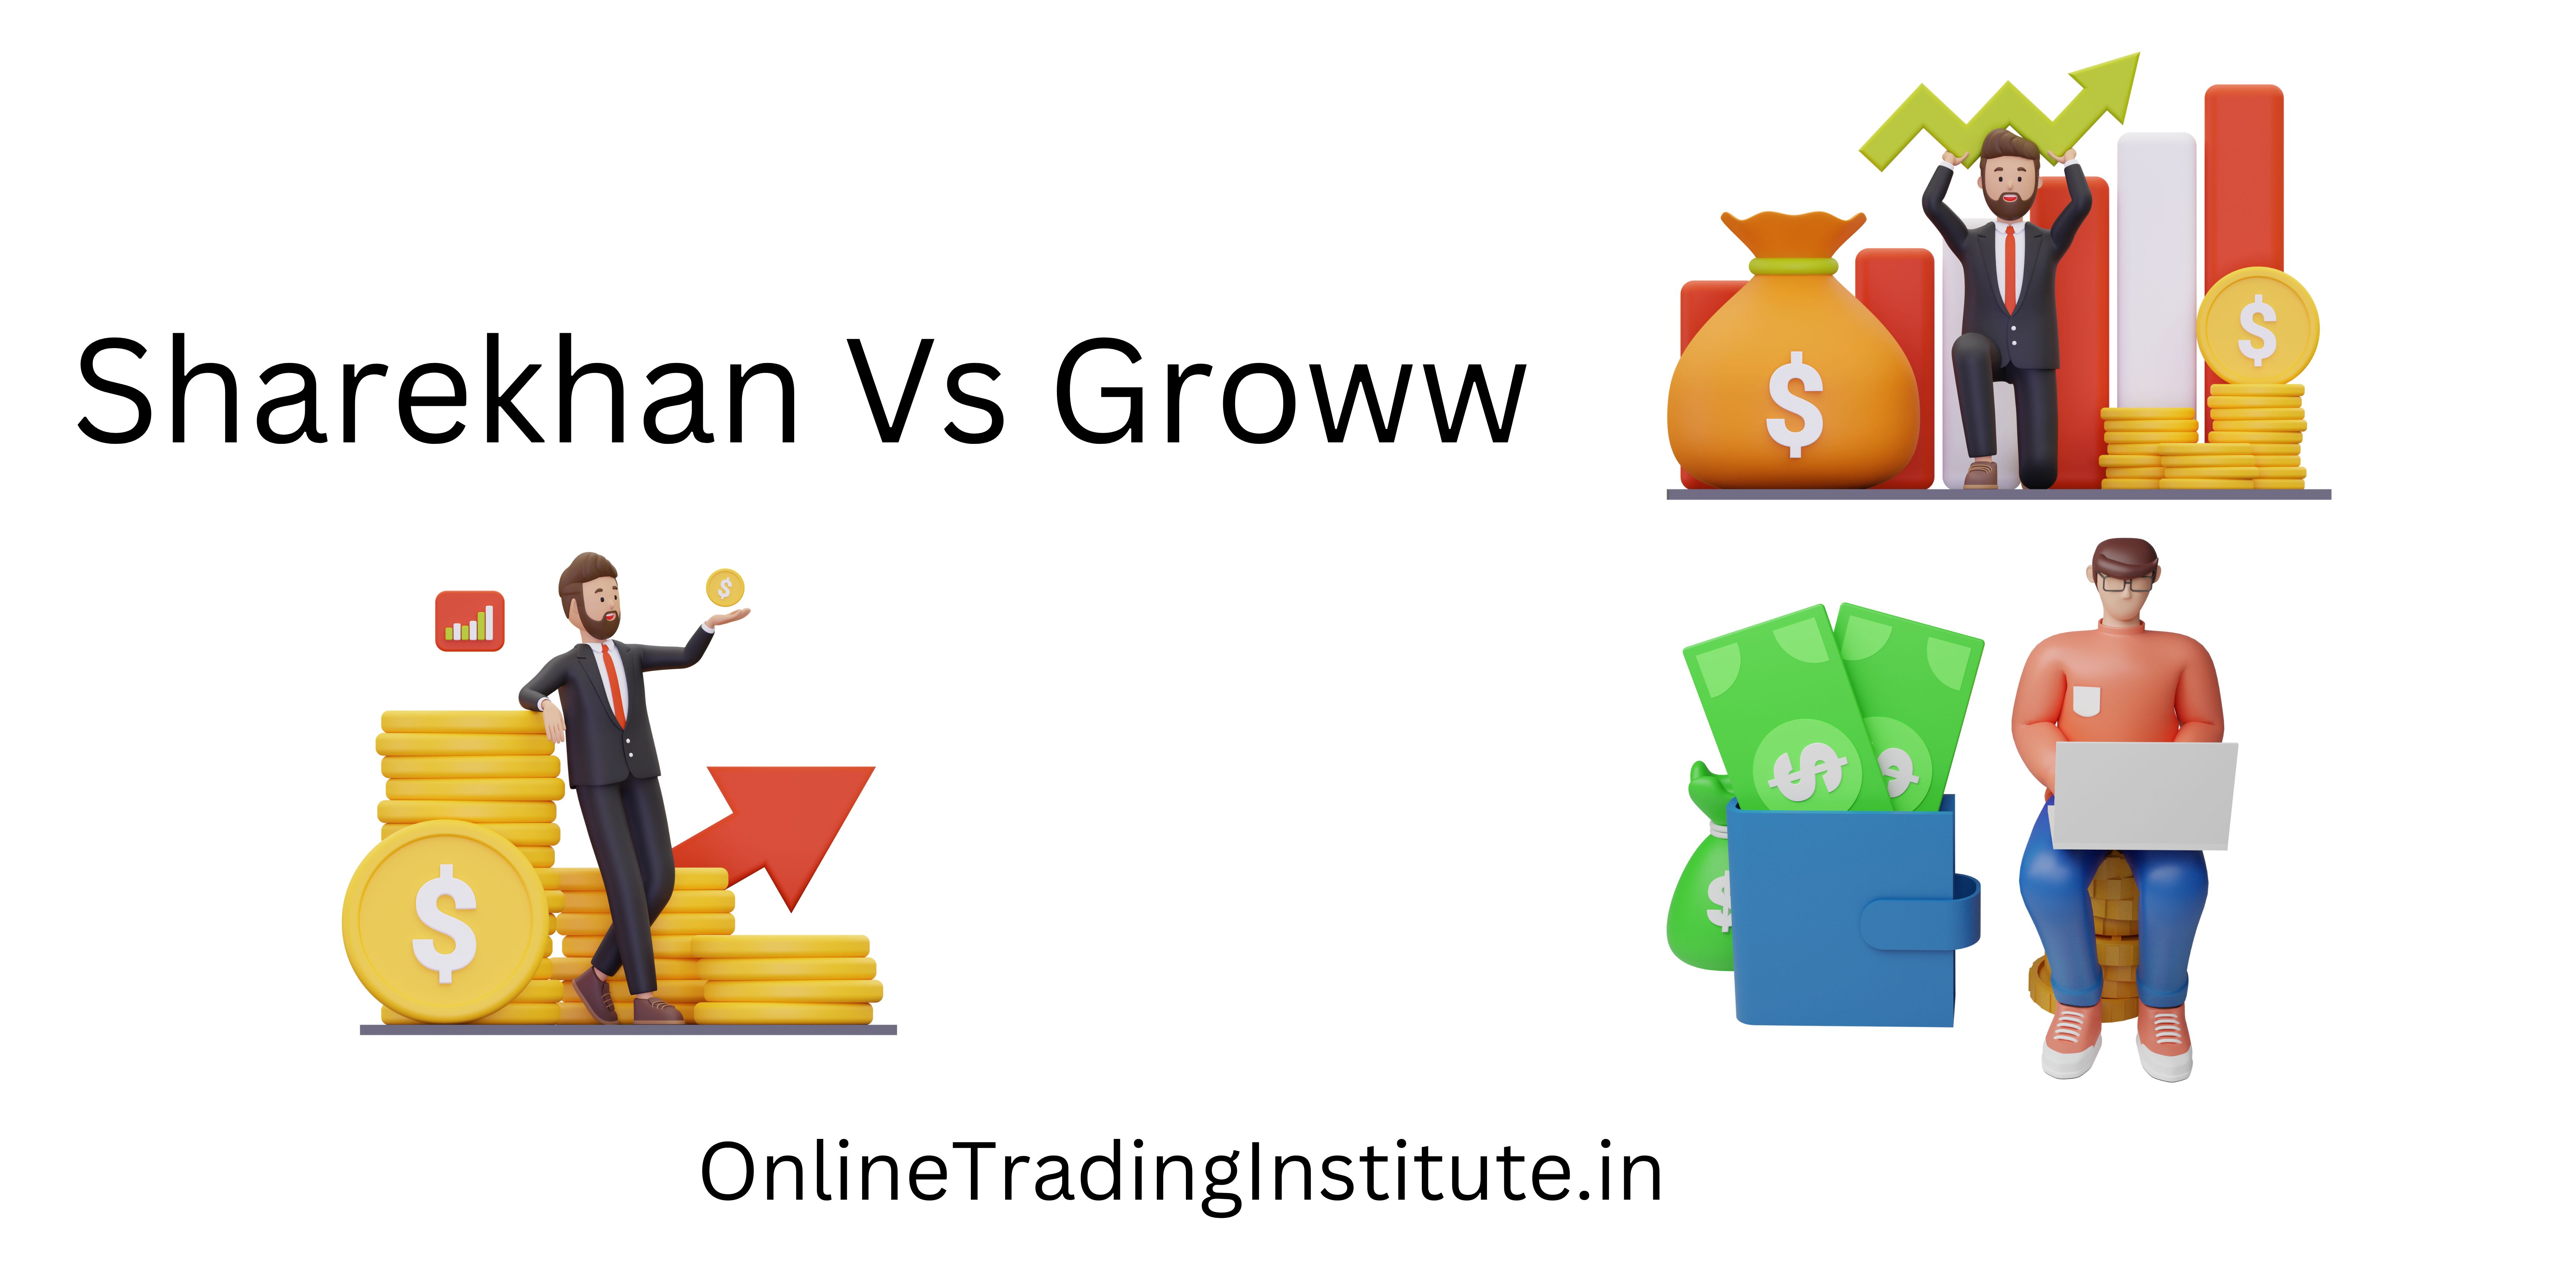 sharekhan vs groww which is better for beginners